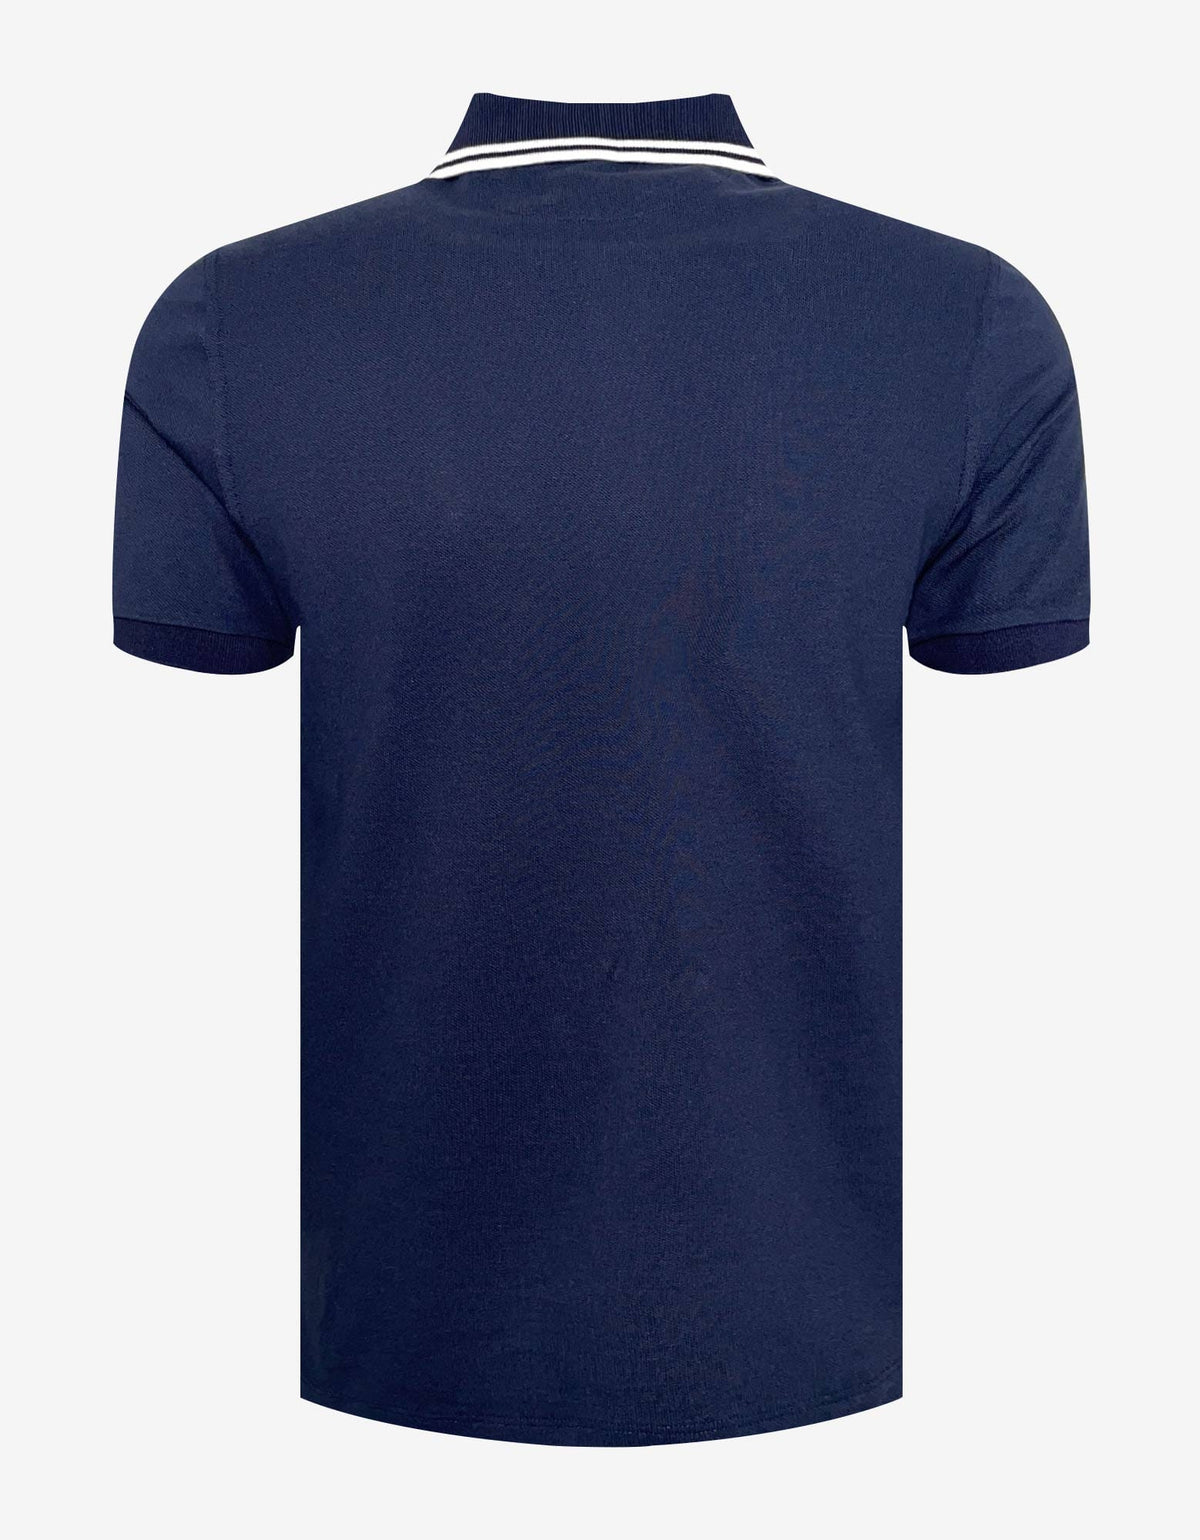 Valentino Navy Blue Optical Valentino Patch Polo T-Shirt